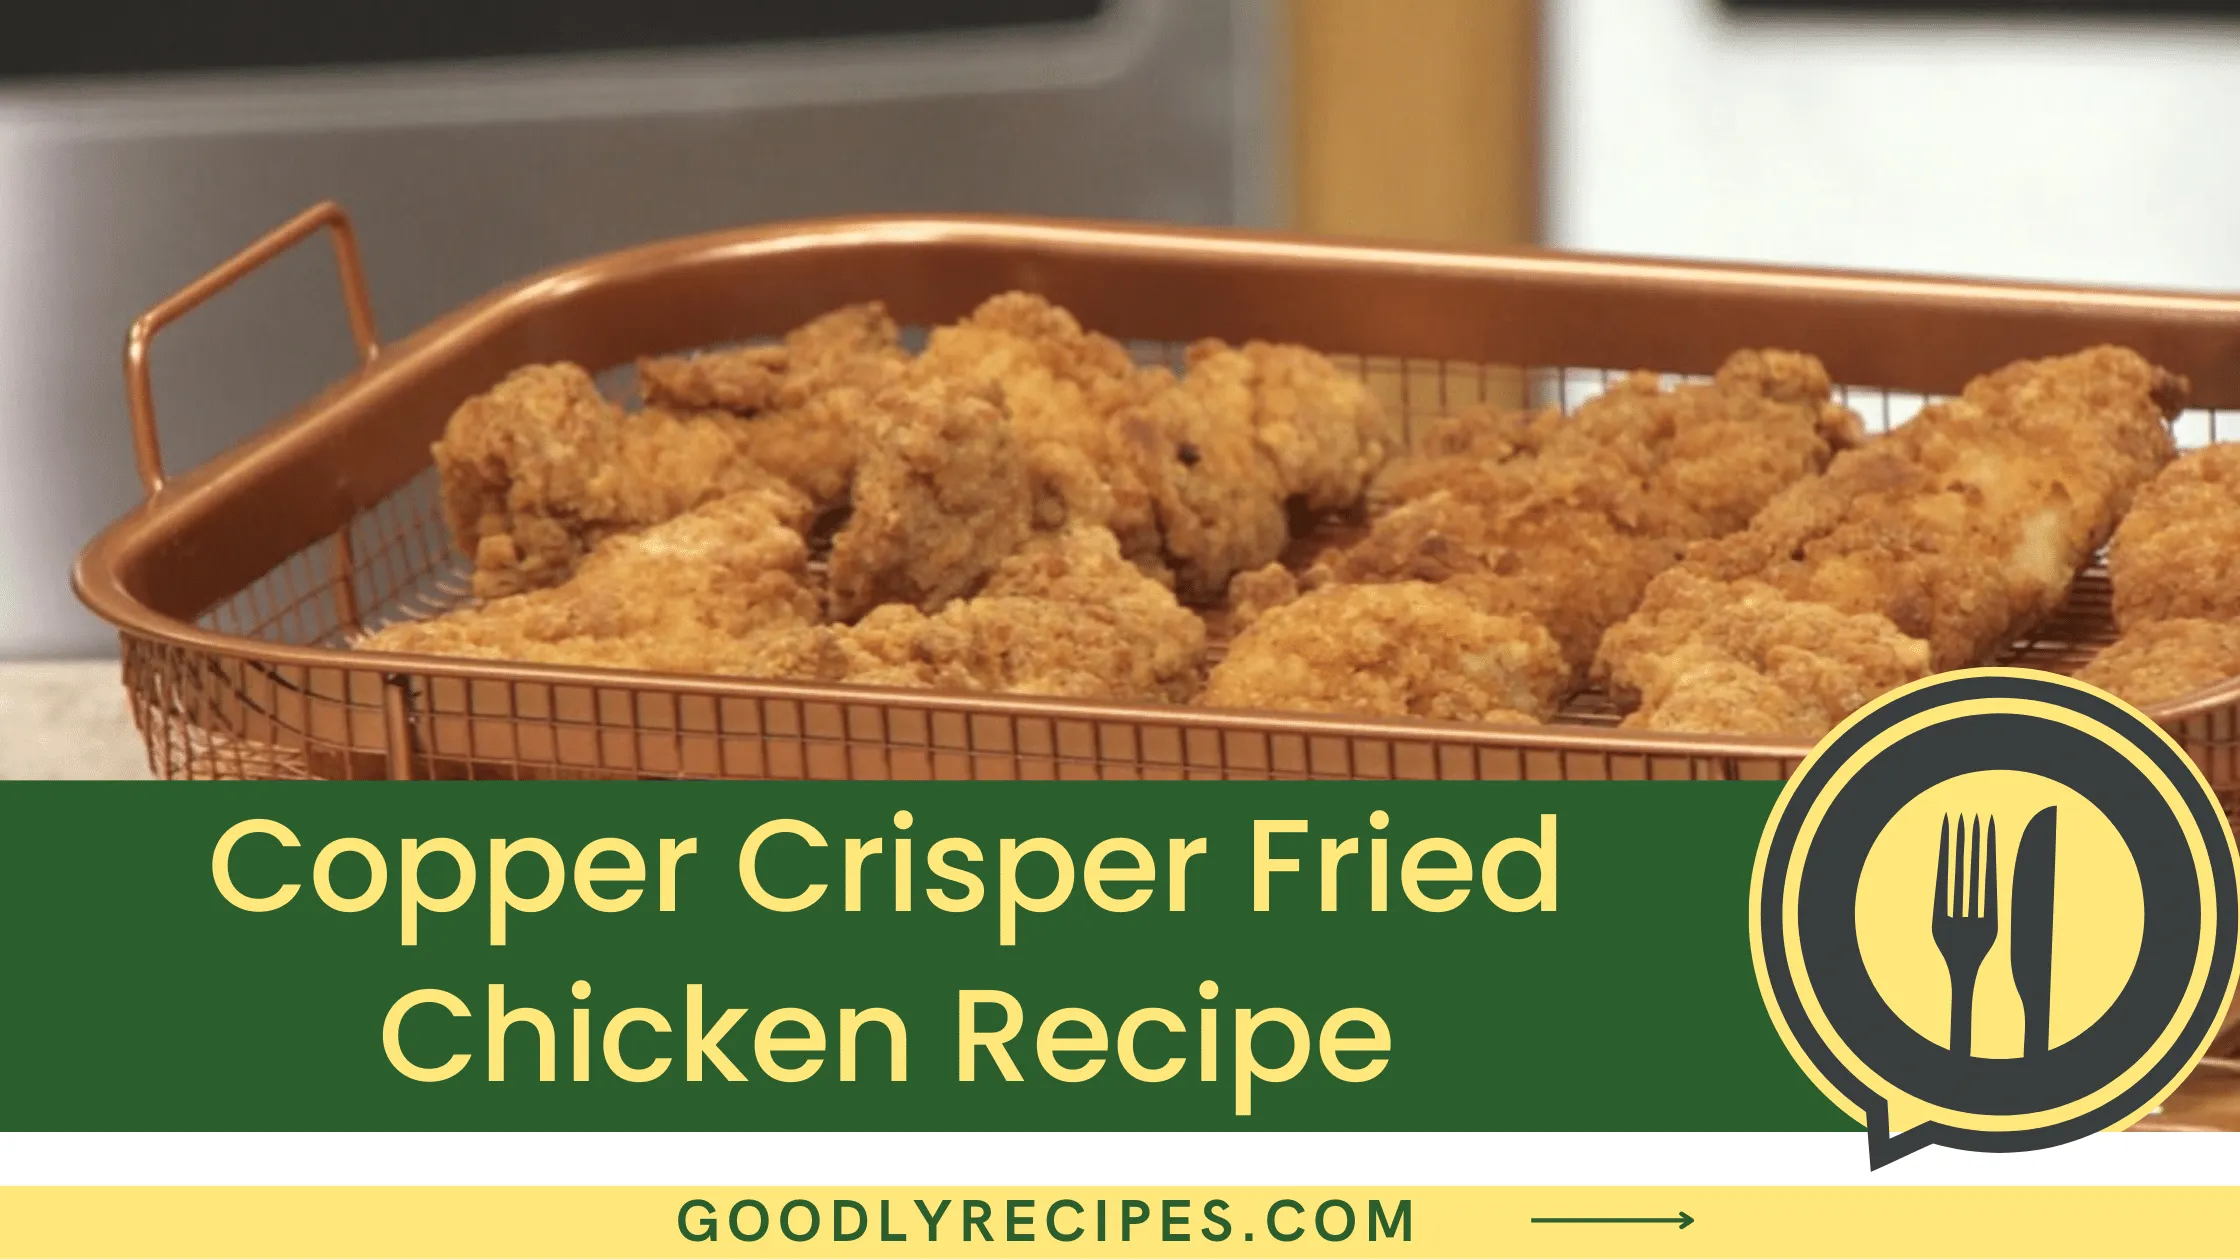 Copper Crisper Fried Chicken Recipe - For Food Lovers